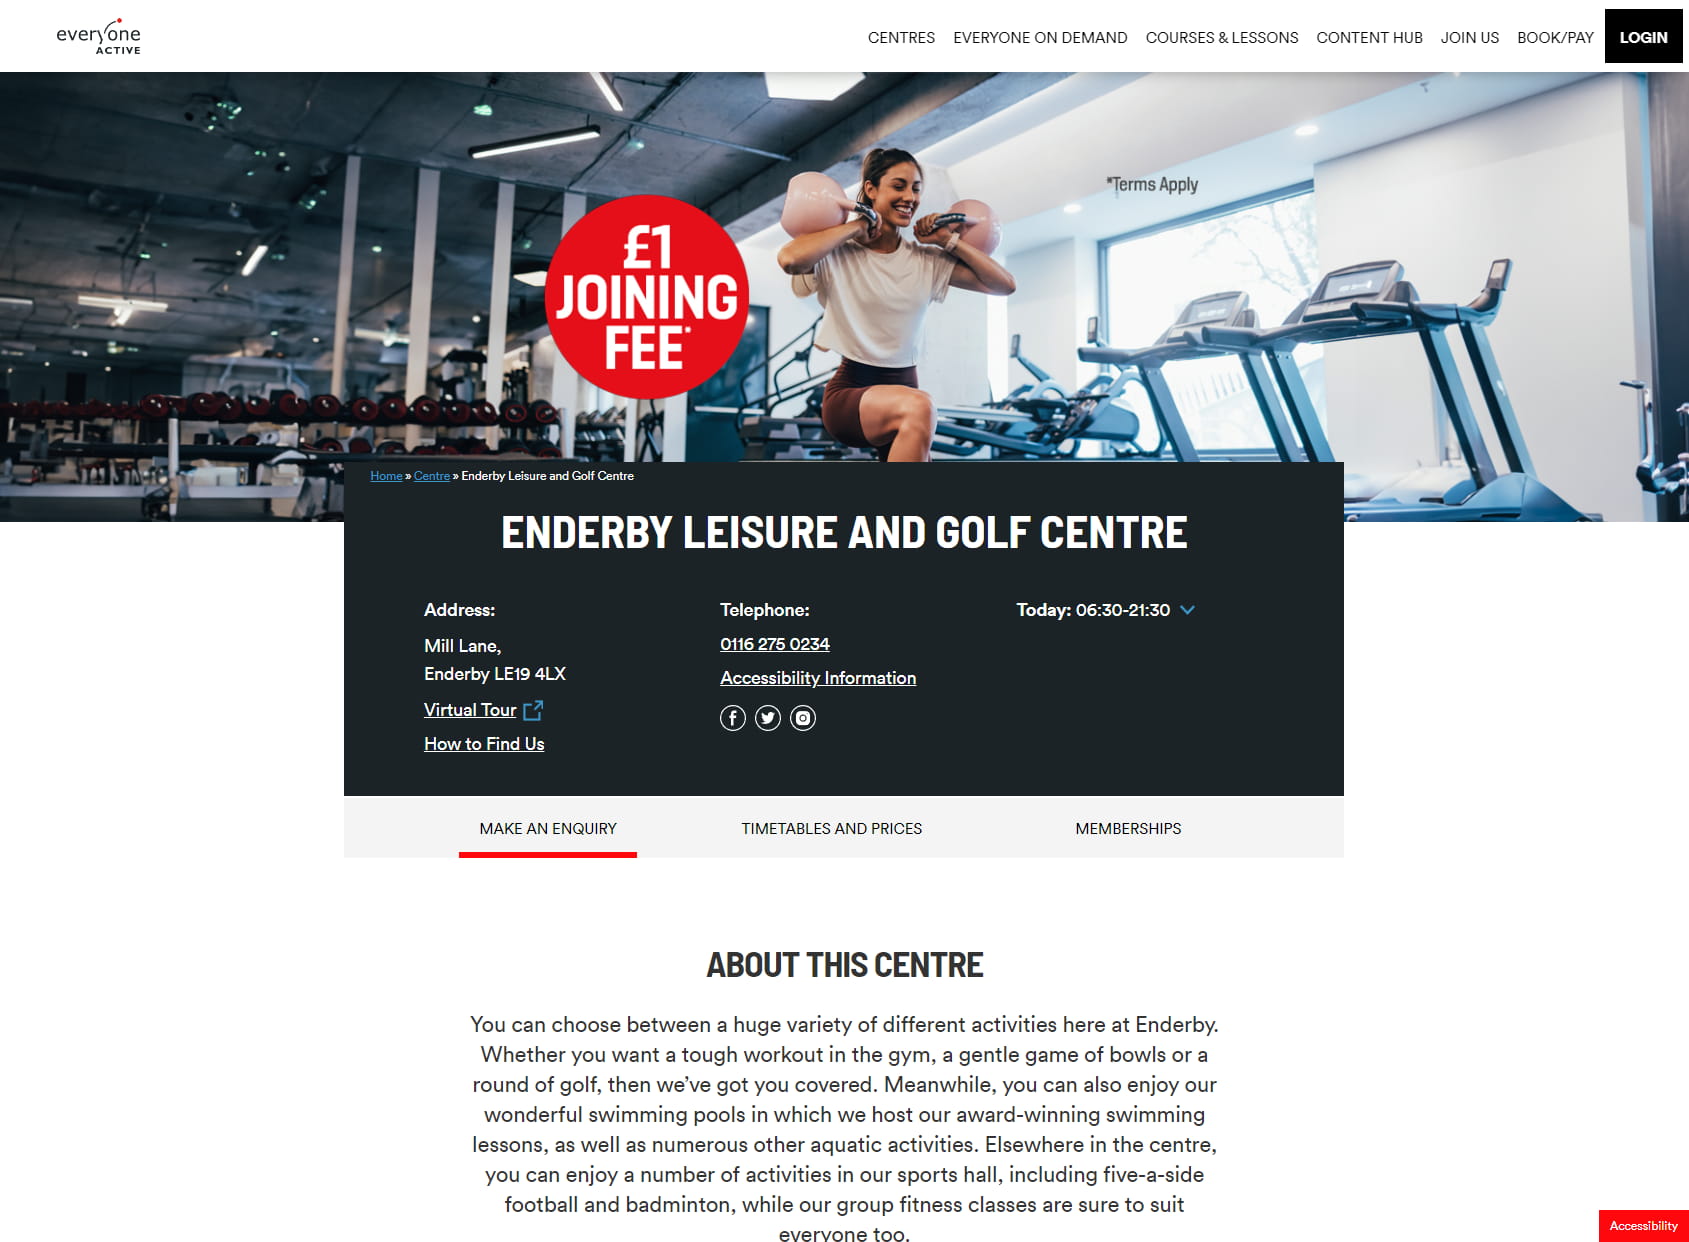 Enderby Leisure Centre & Golf Centre